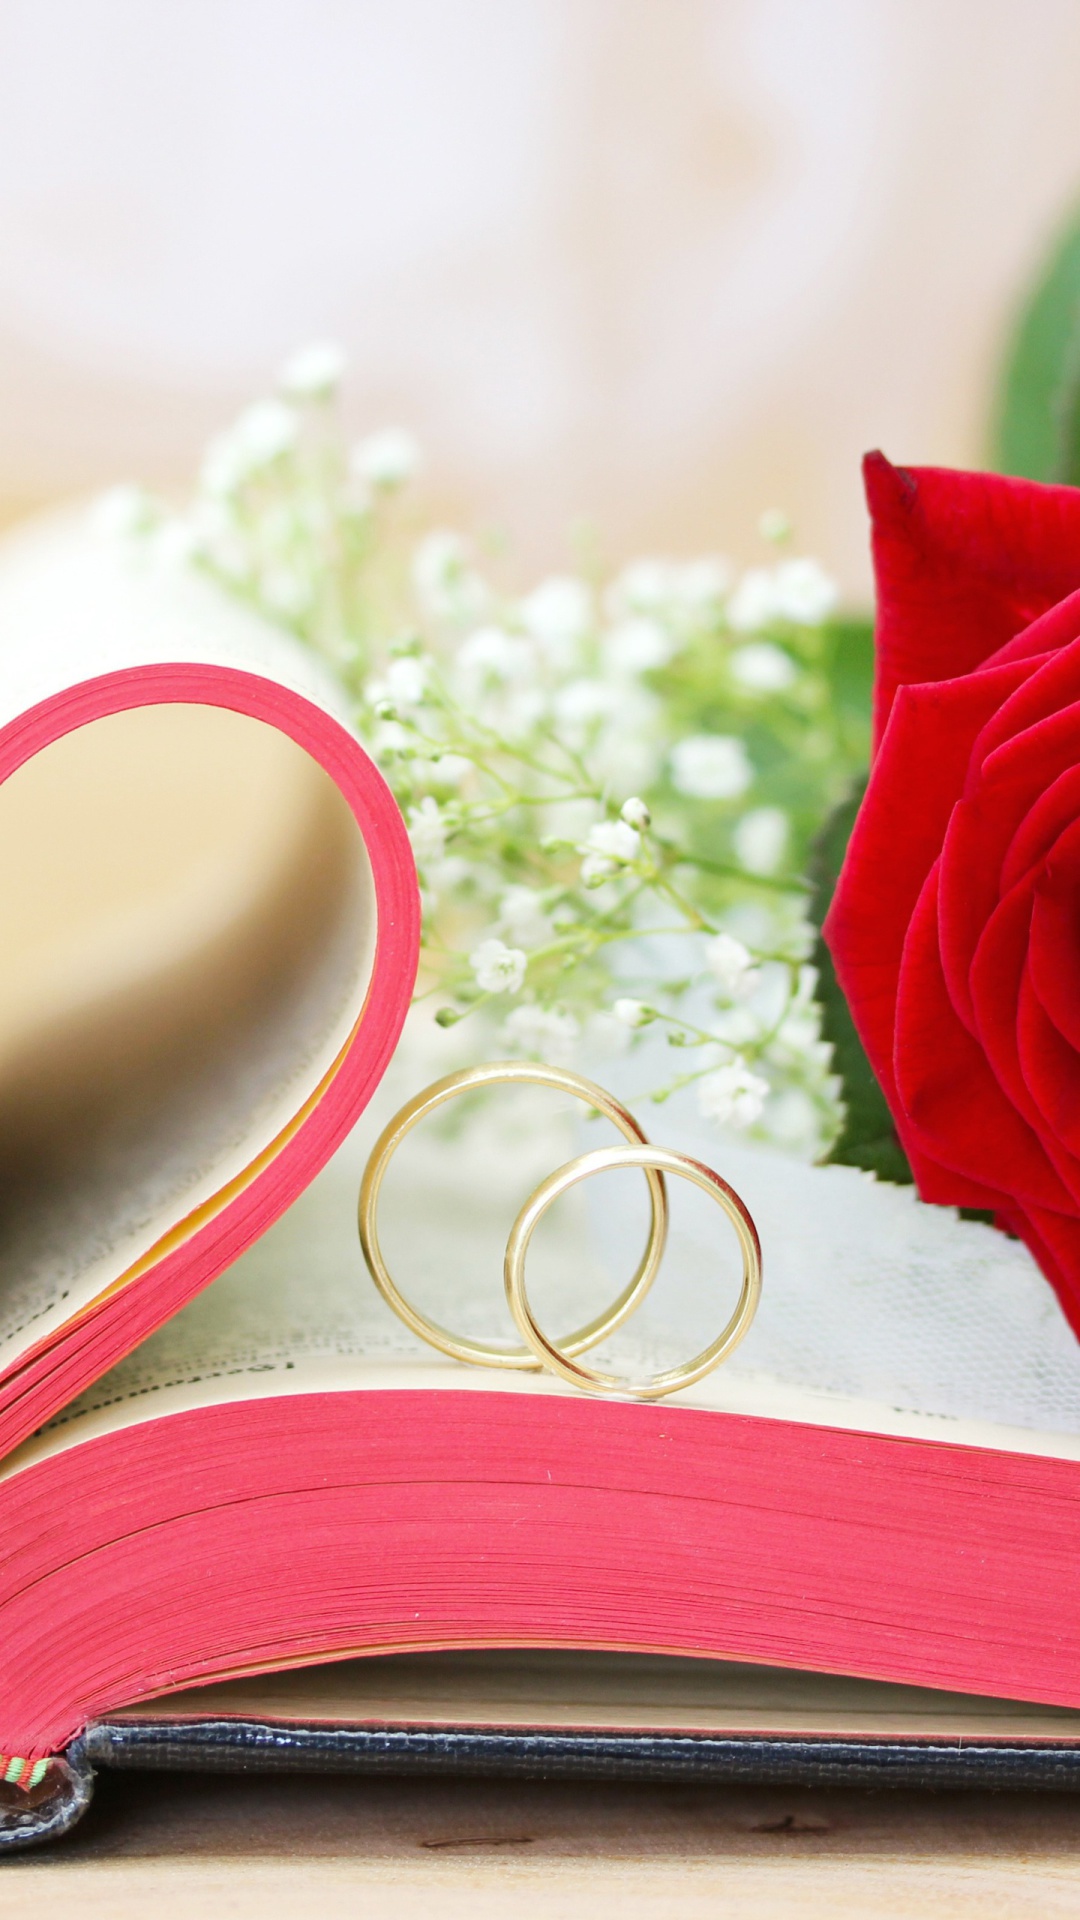 Das Wedding rings and book Wallpaper 1080x1920